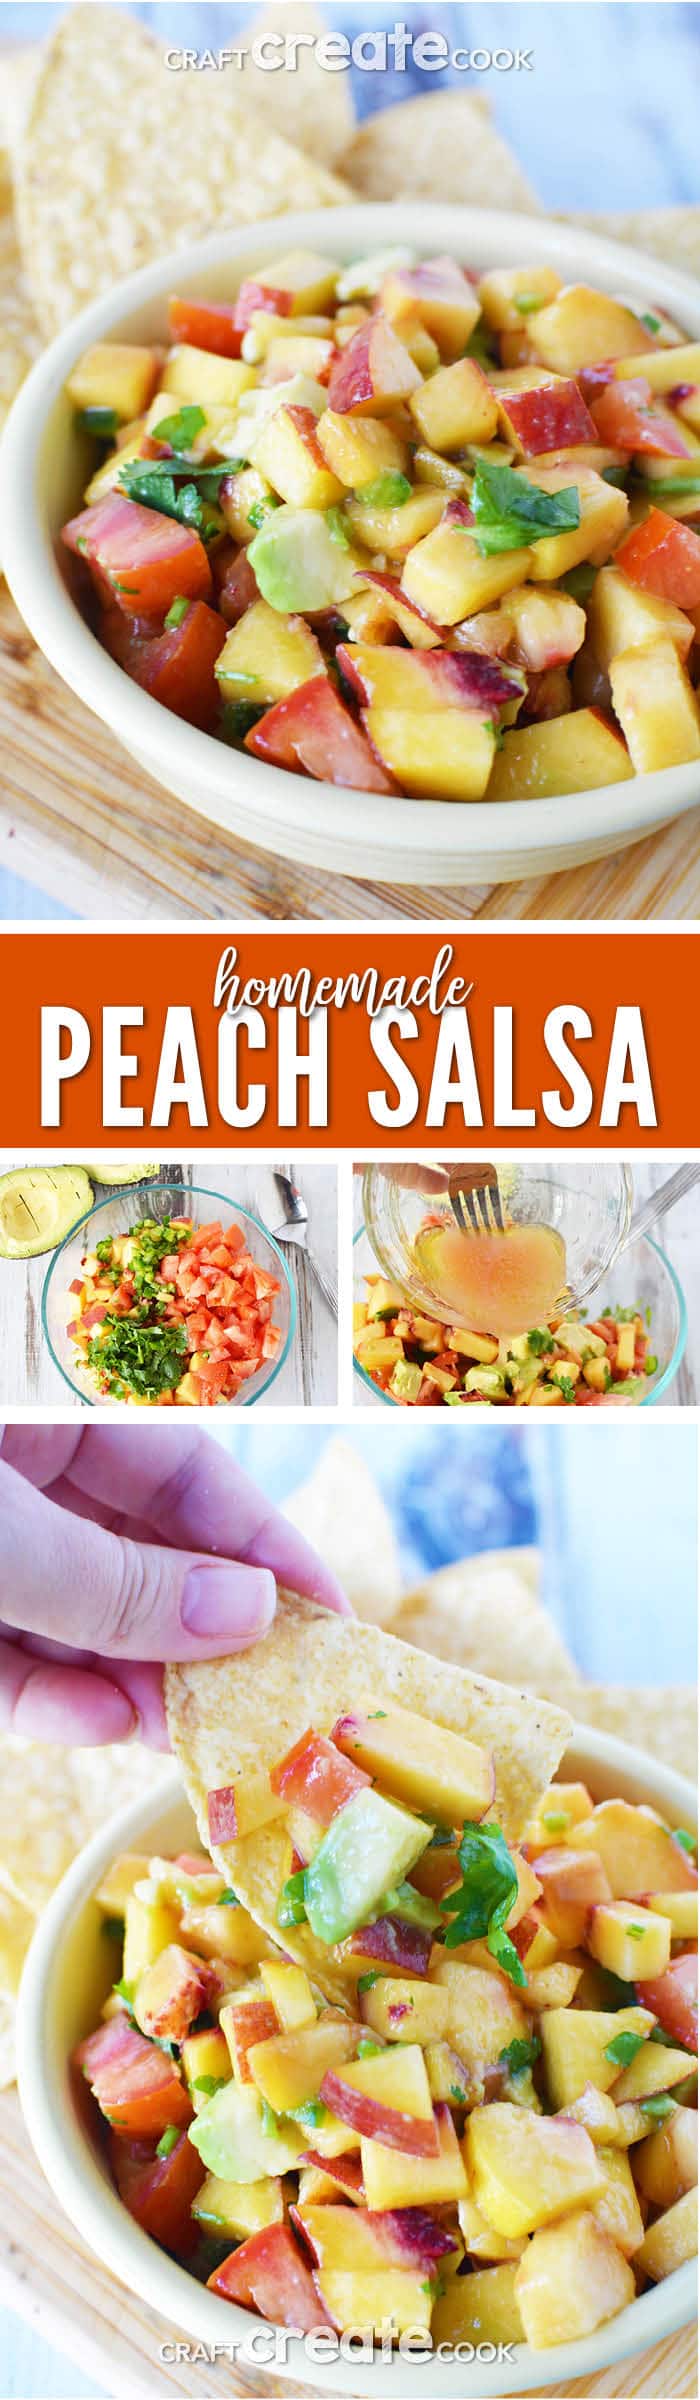 Homemade Peach Salsa - Craft Create Cook